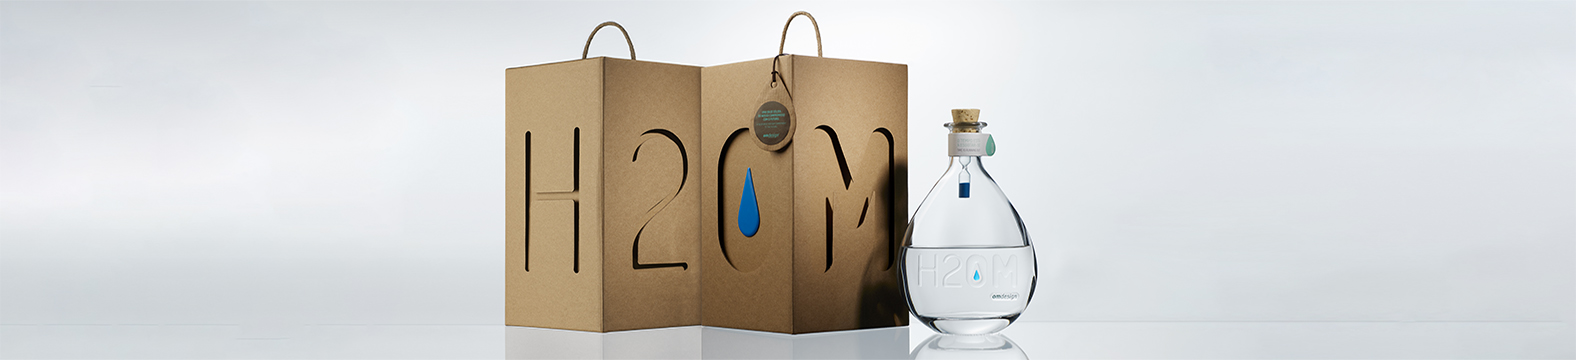 Omdesign: Message in a bottle